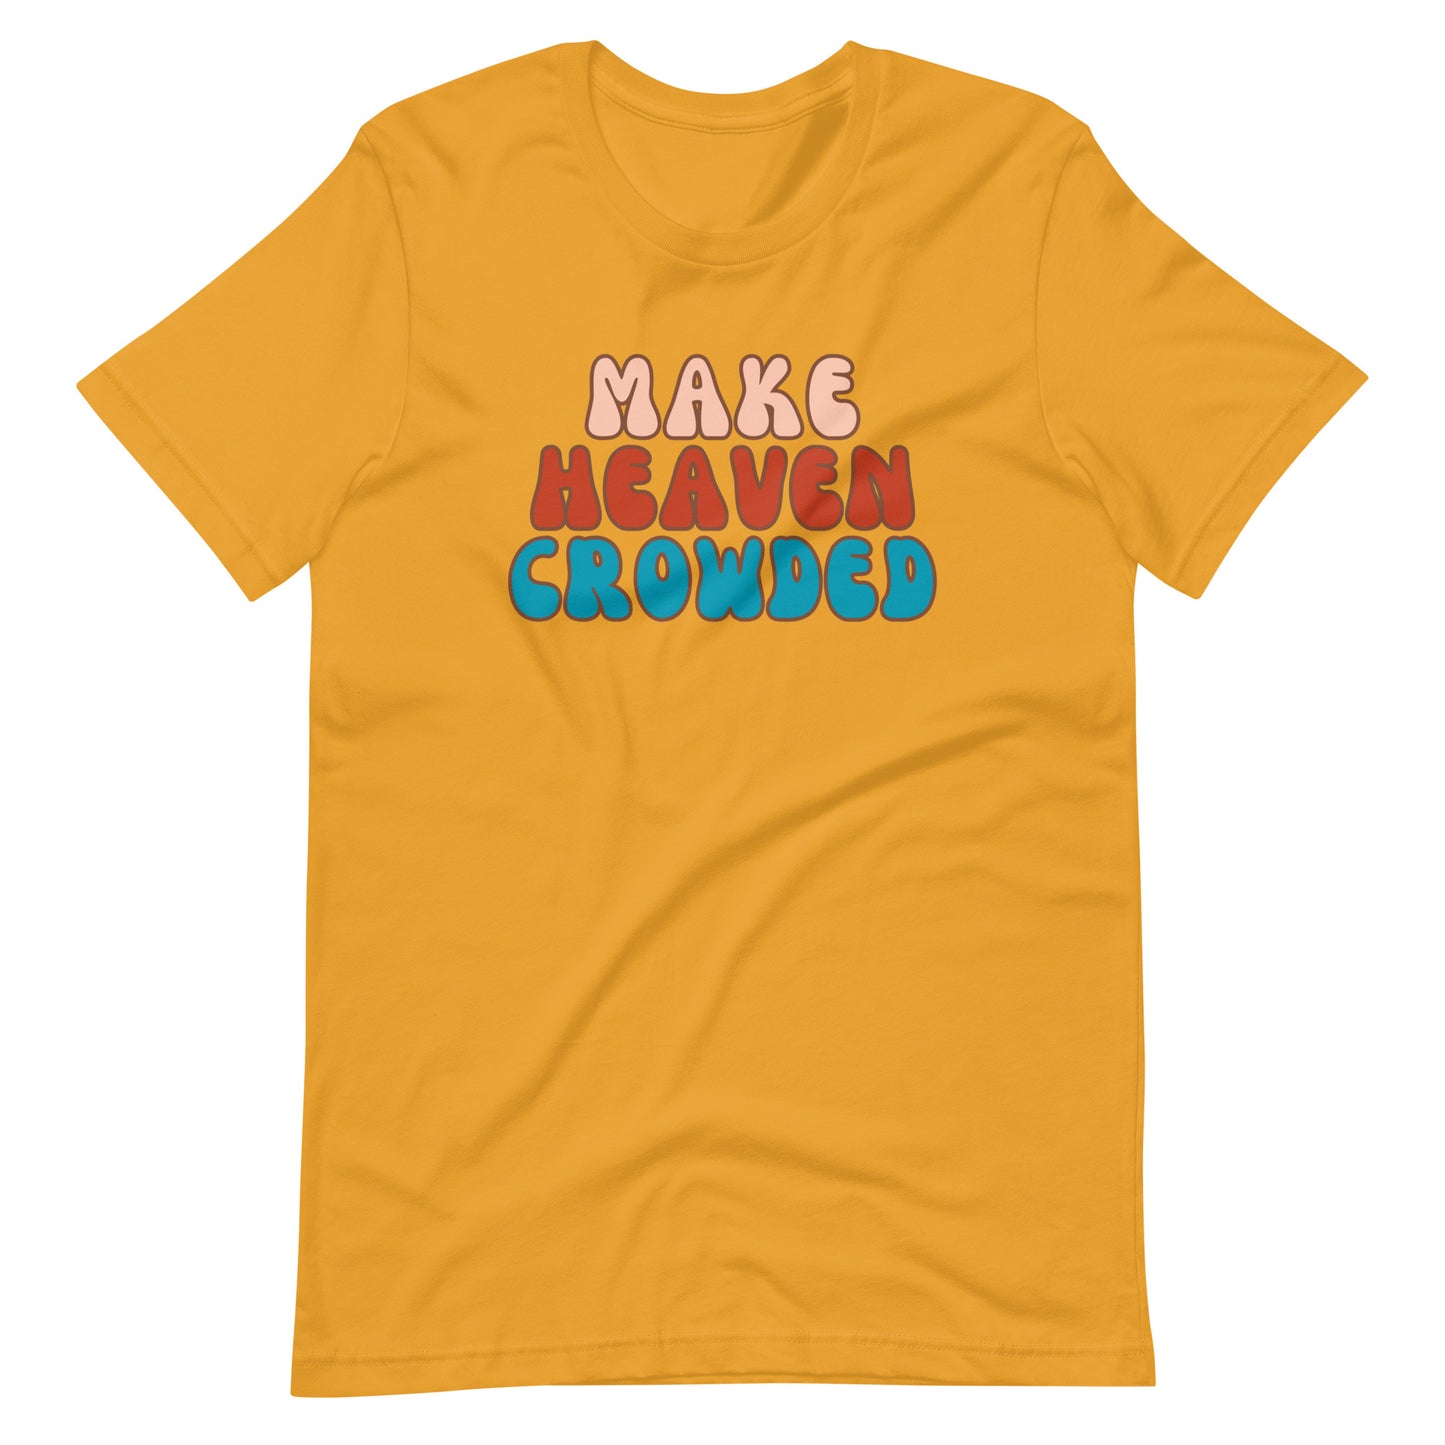 Make Heaven Crowded t-shirt